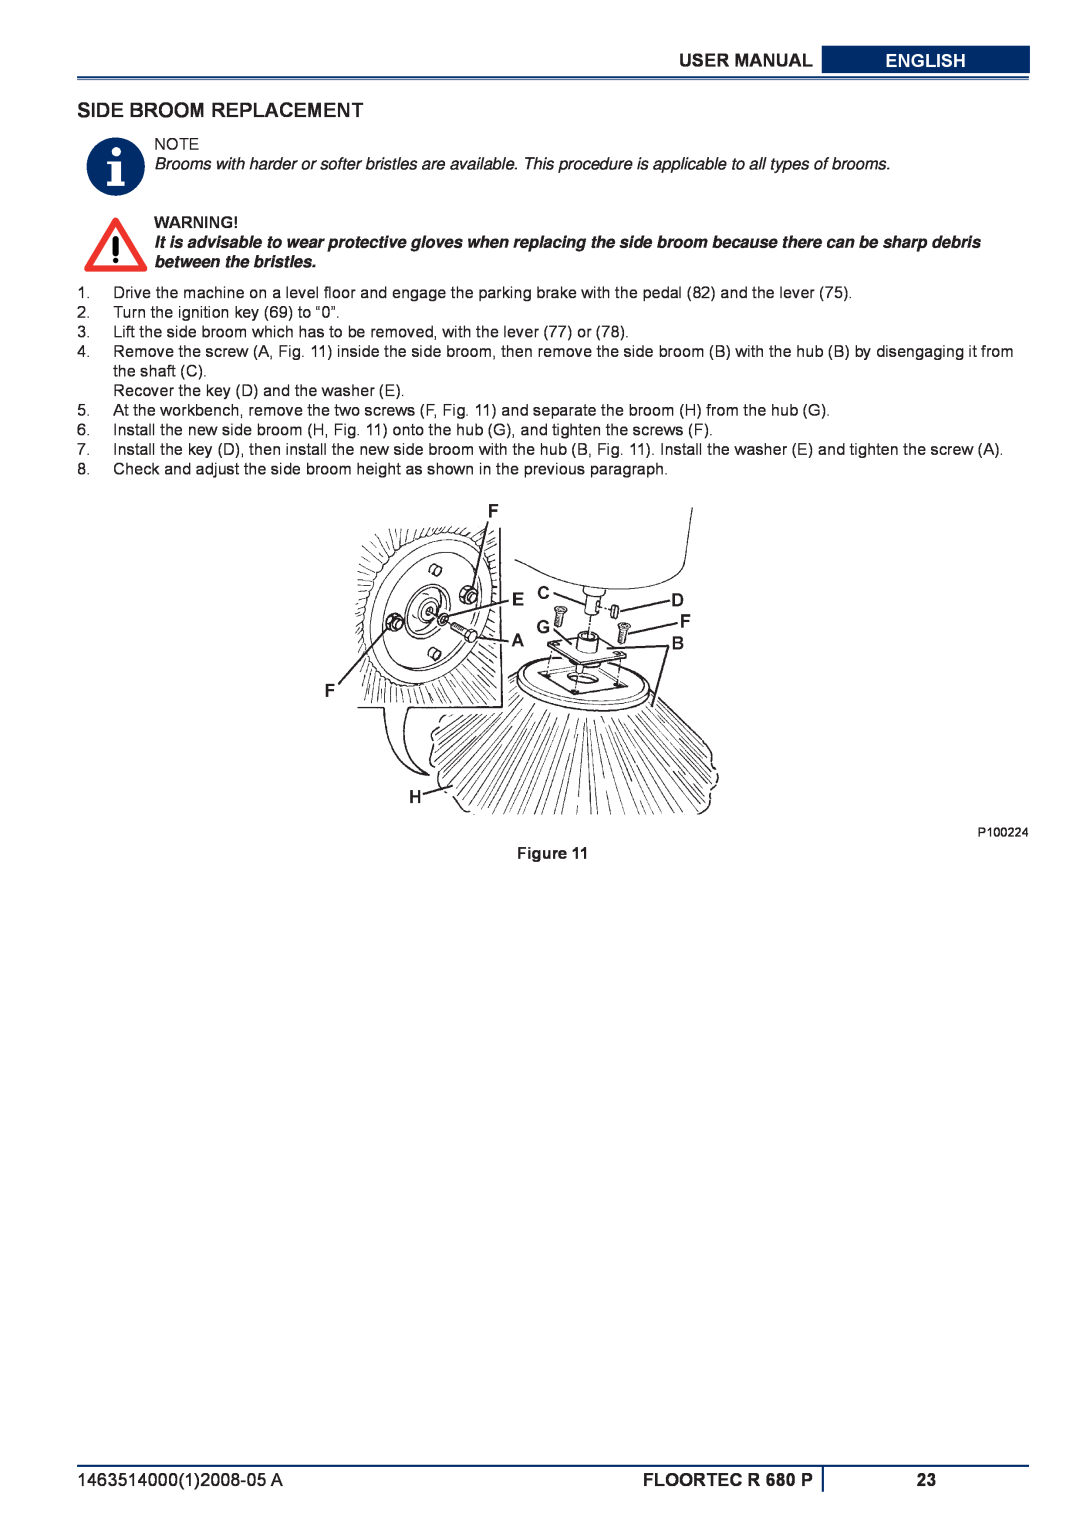 Nilfisk-ALTO manuel dutilisation Side Broom Replacement, User Manual, English, FLOORTEC R 680 P 